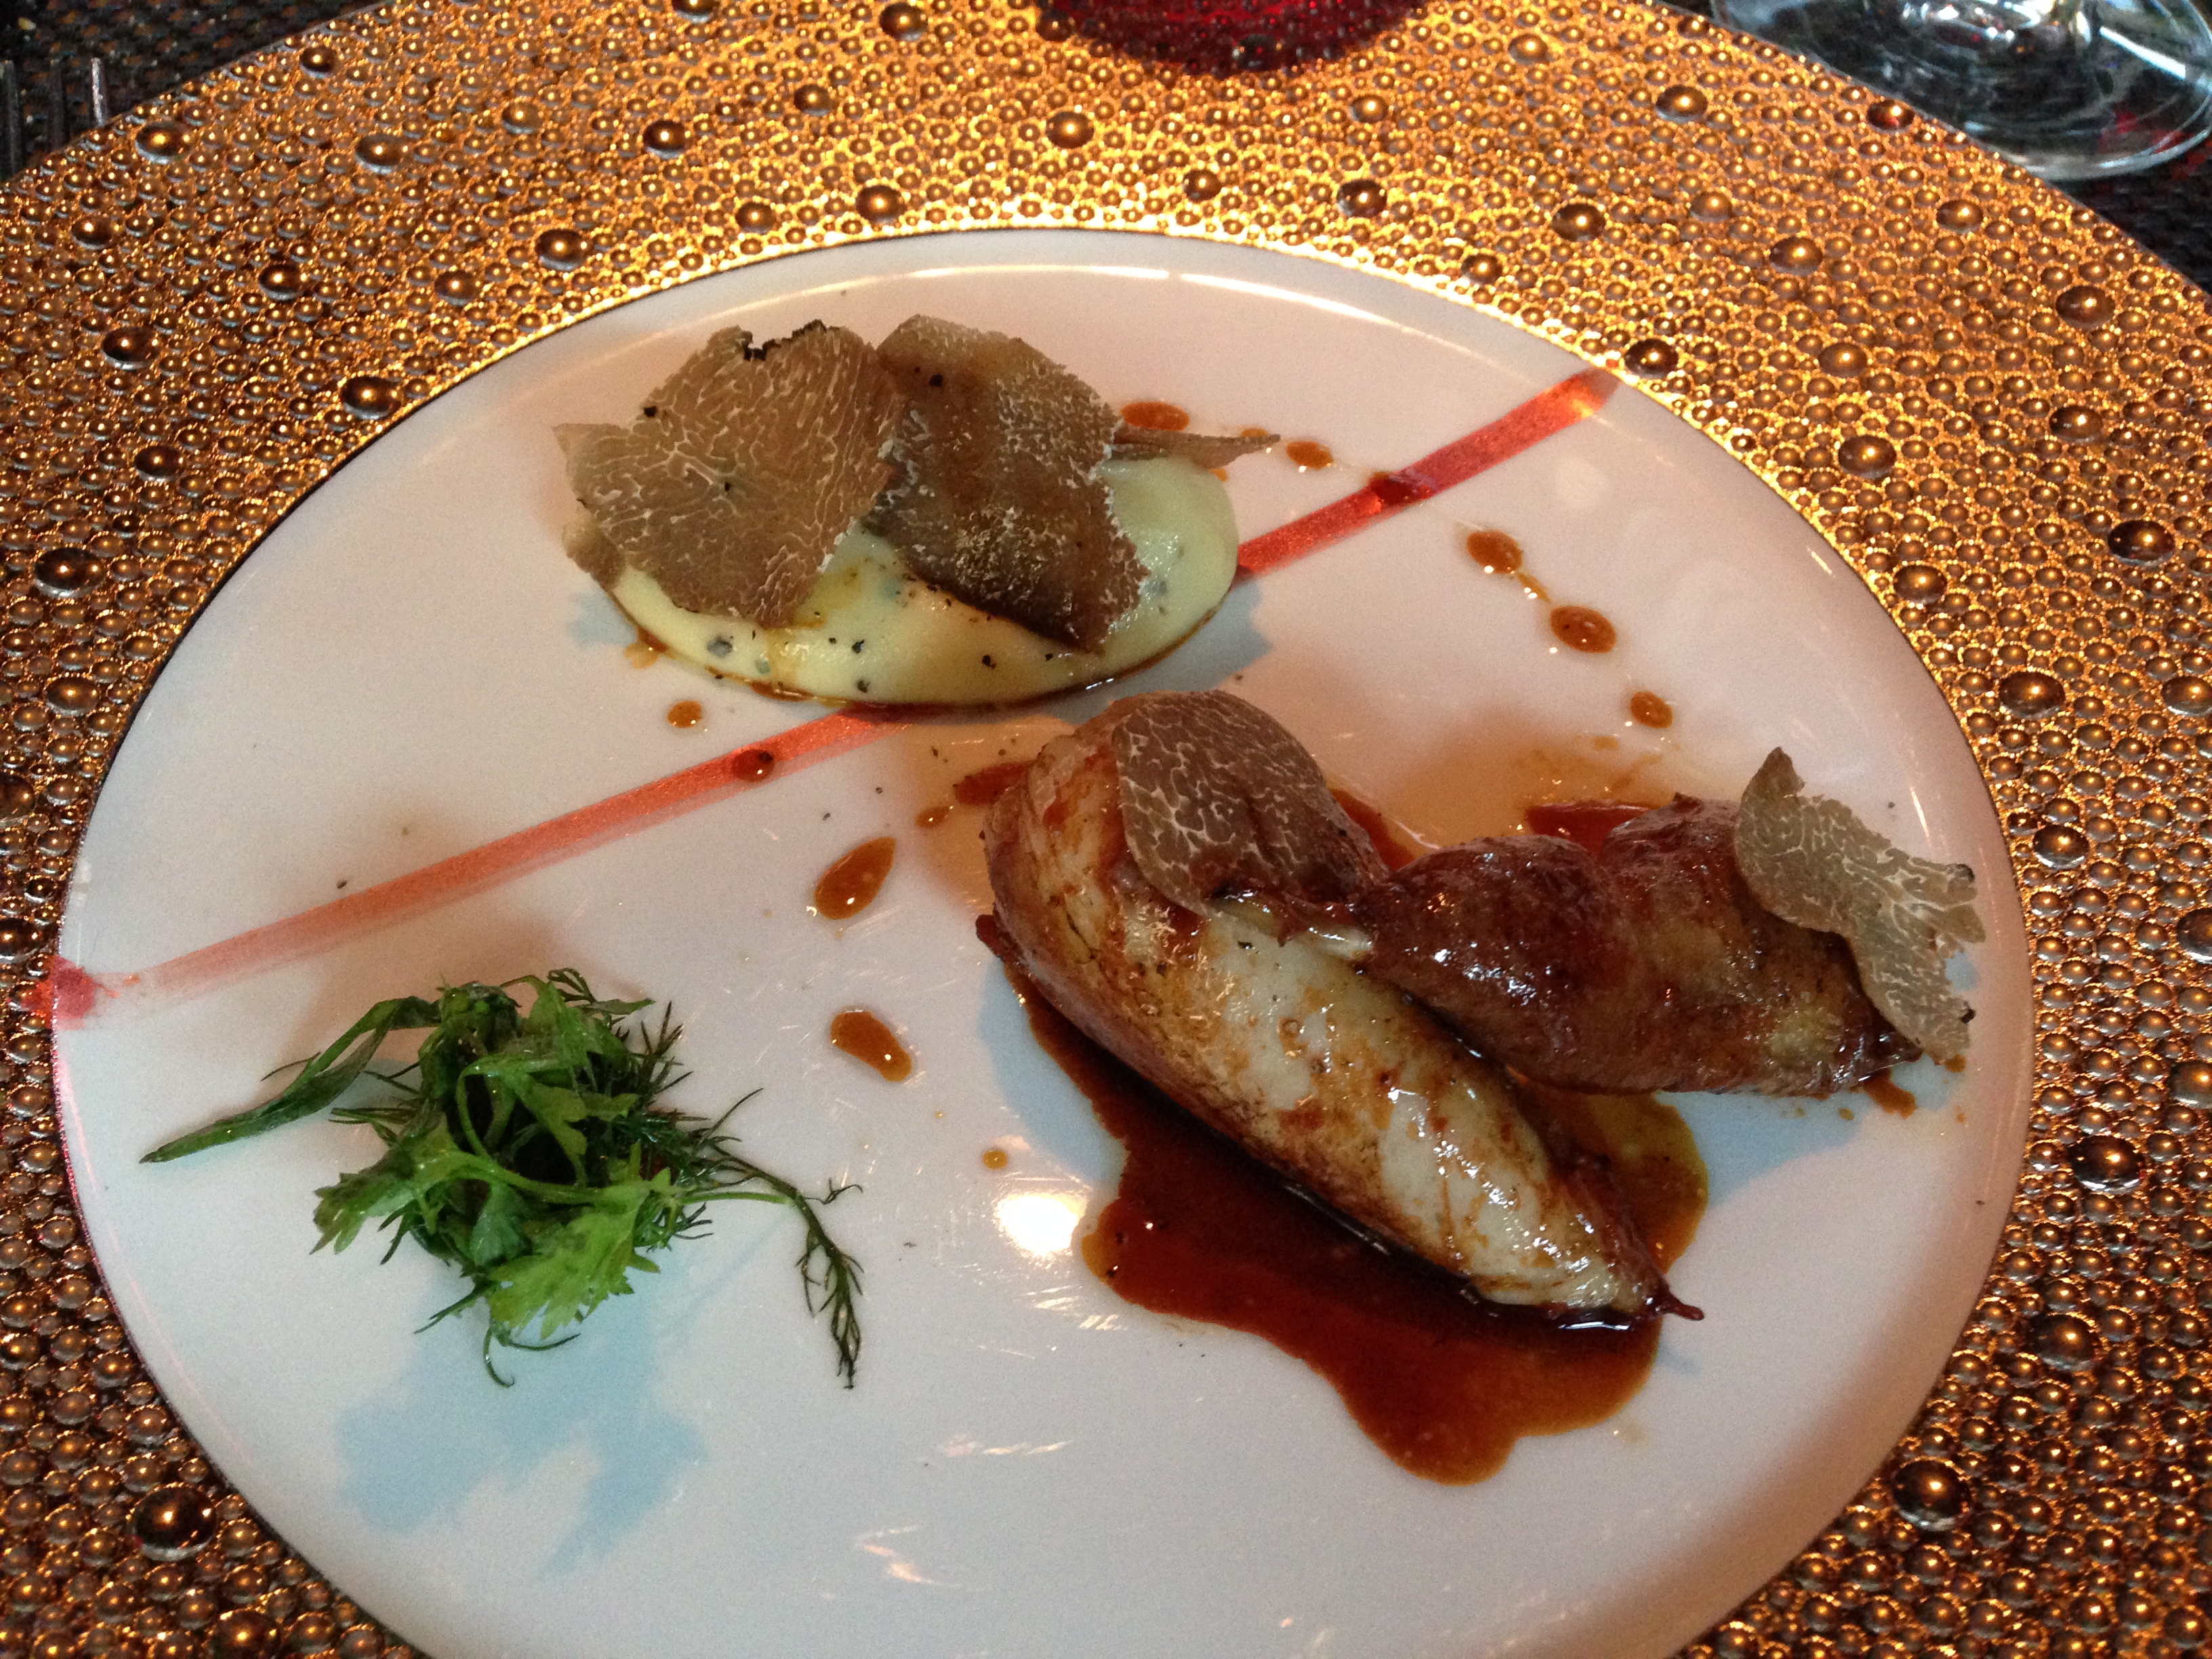 Delicious Destinations Las Vegas - gebratene Wachtelbrust mit Foie gras